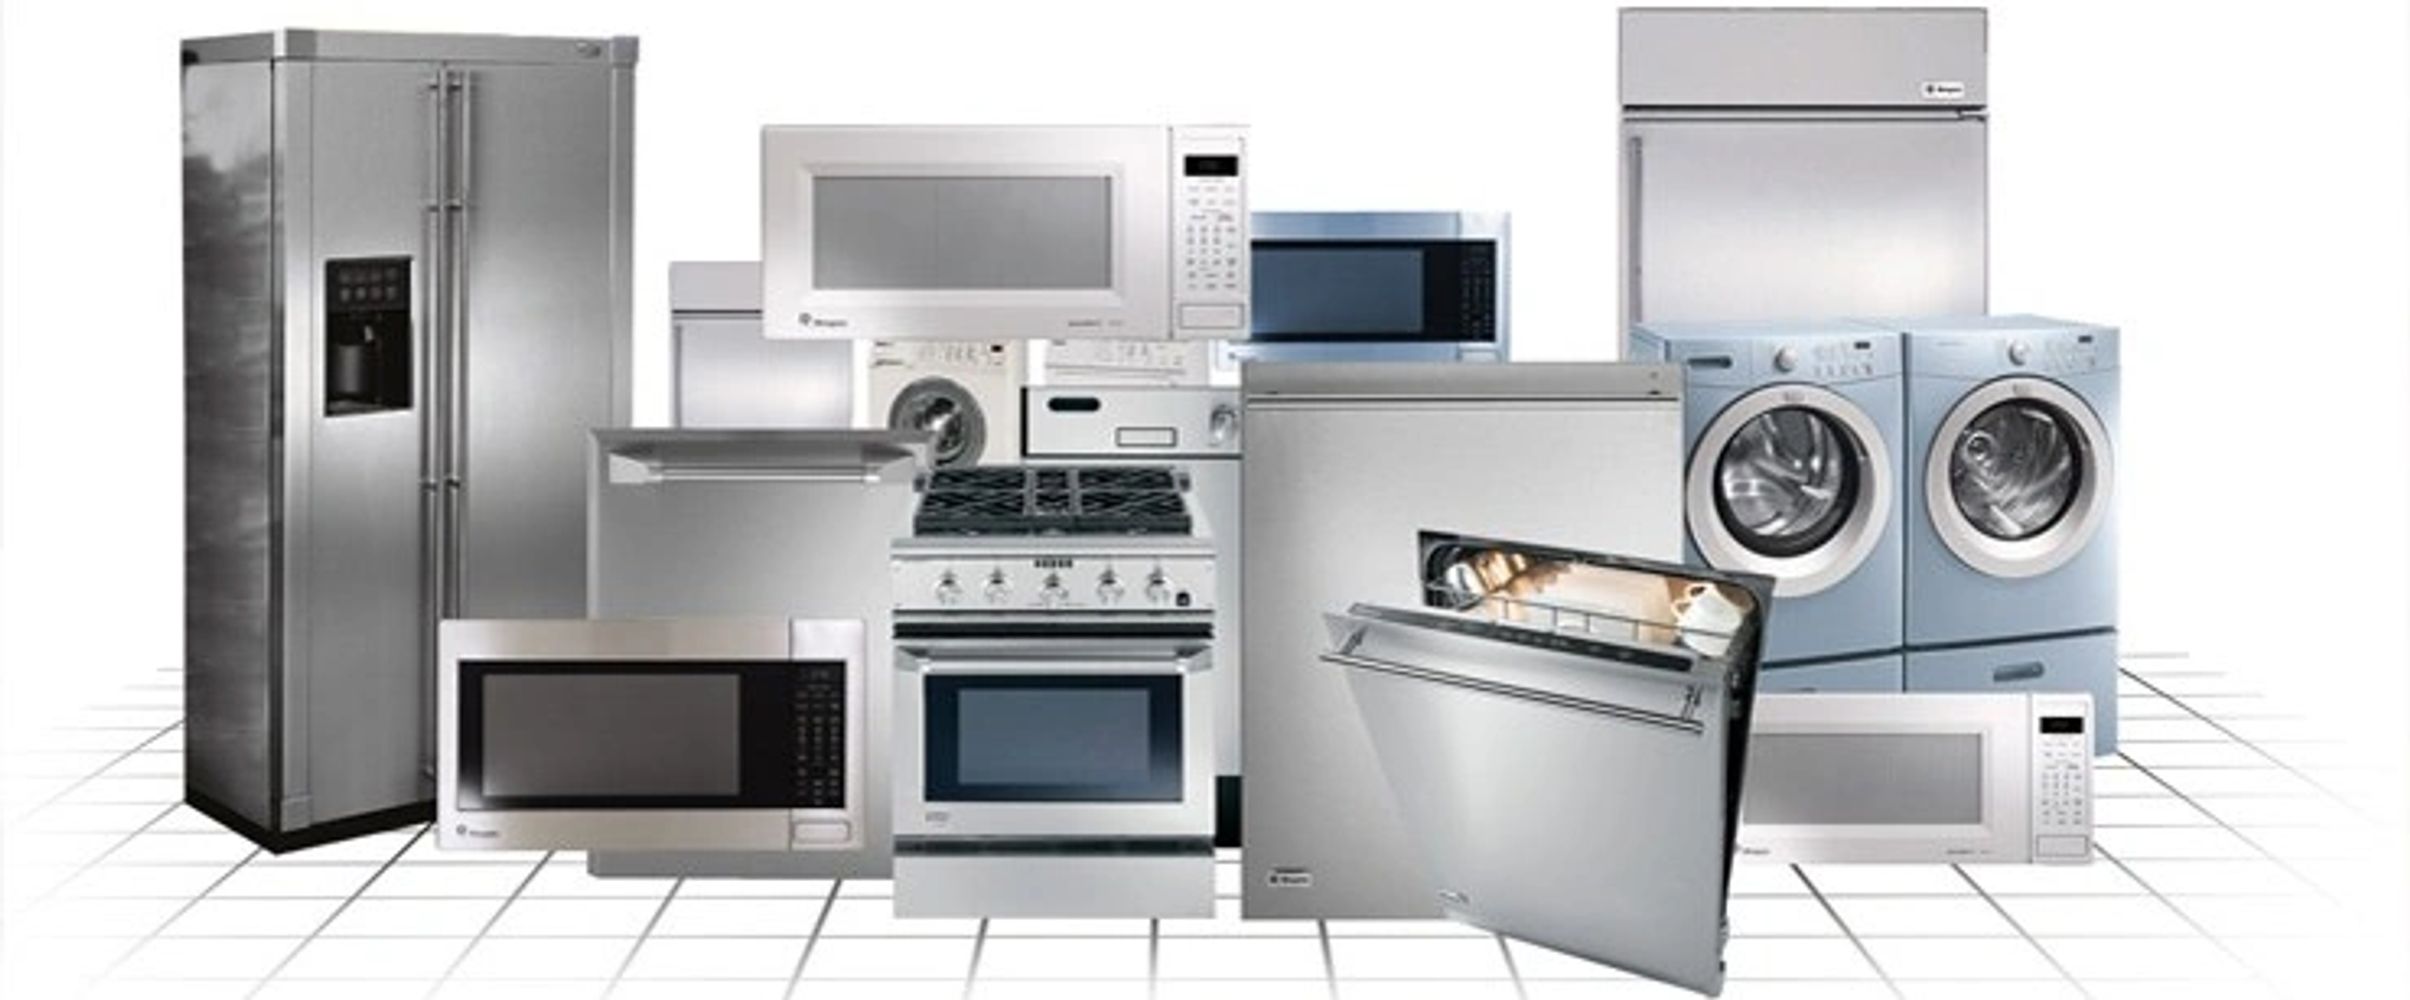 Sub-zero Appliance Service Dependable Refrigeration & Appliance Repair Service